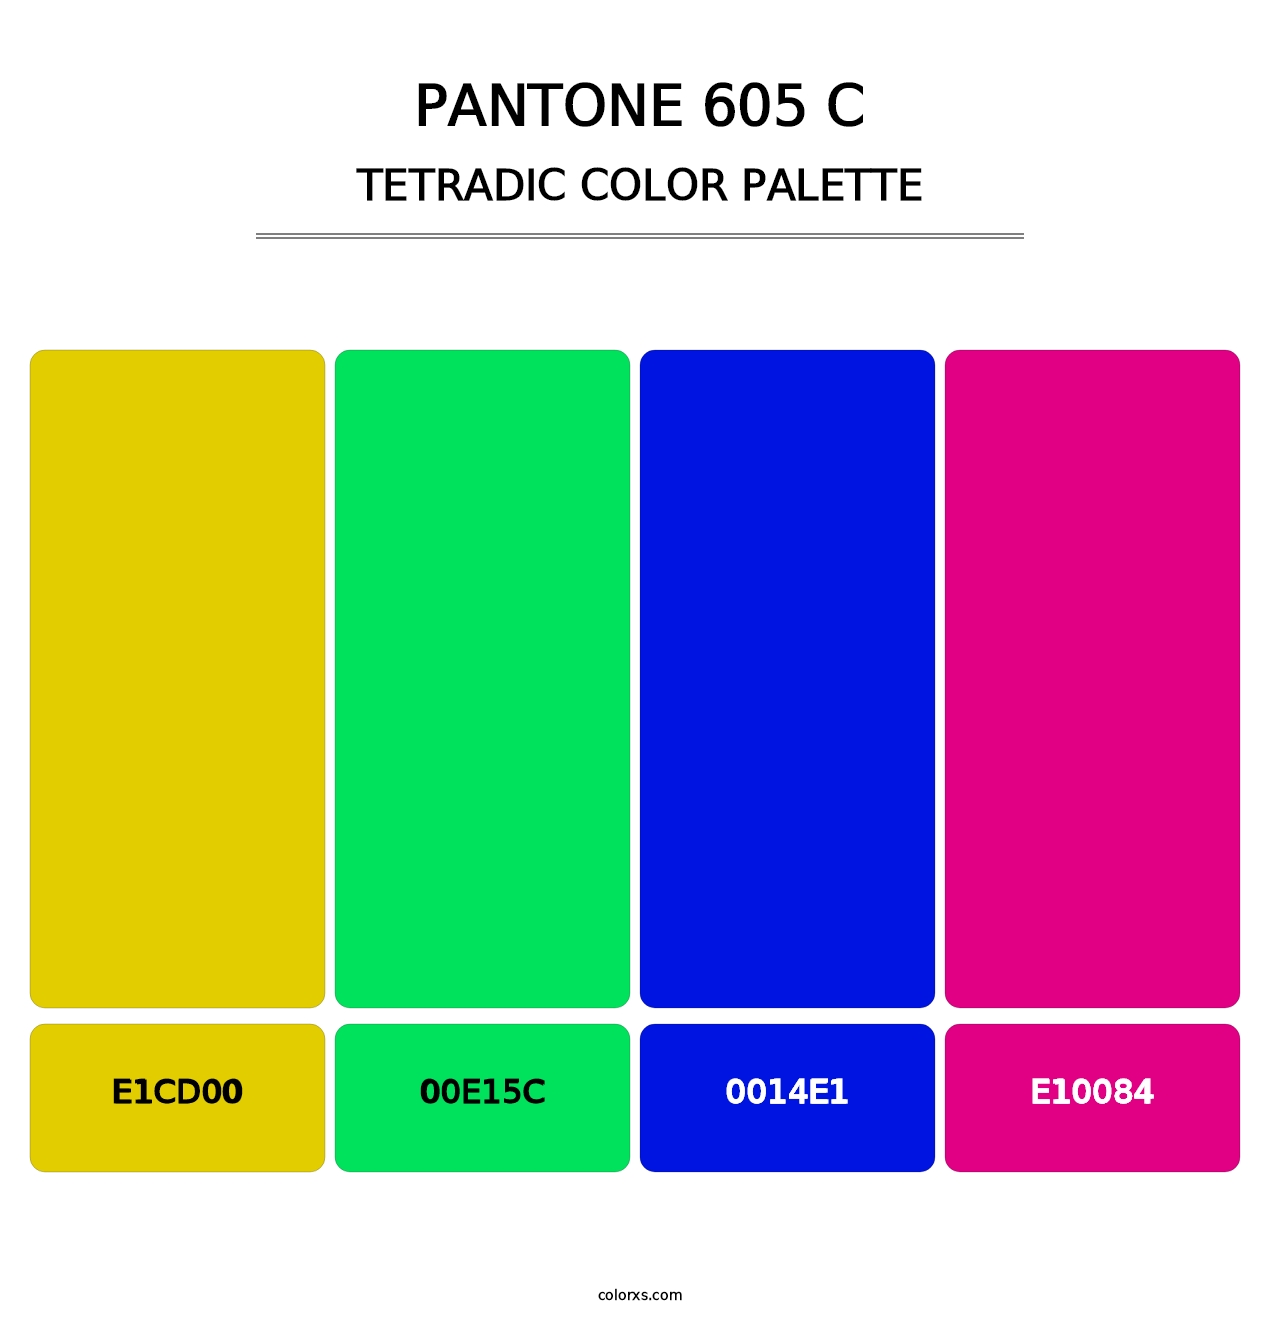 PANTONE 605 C - Tetradic Color Palette